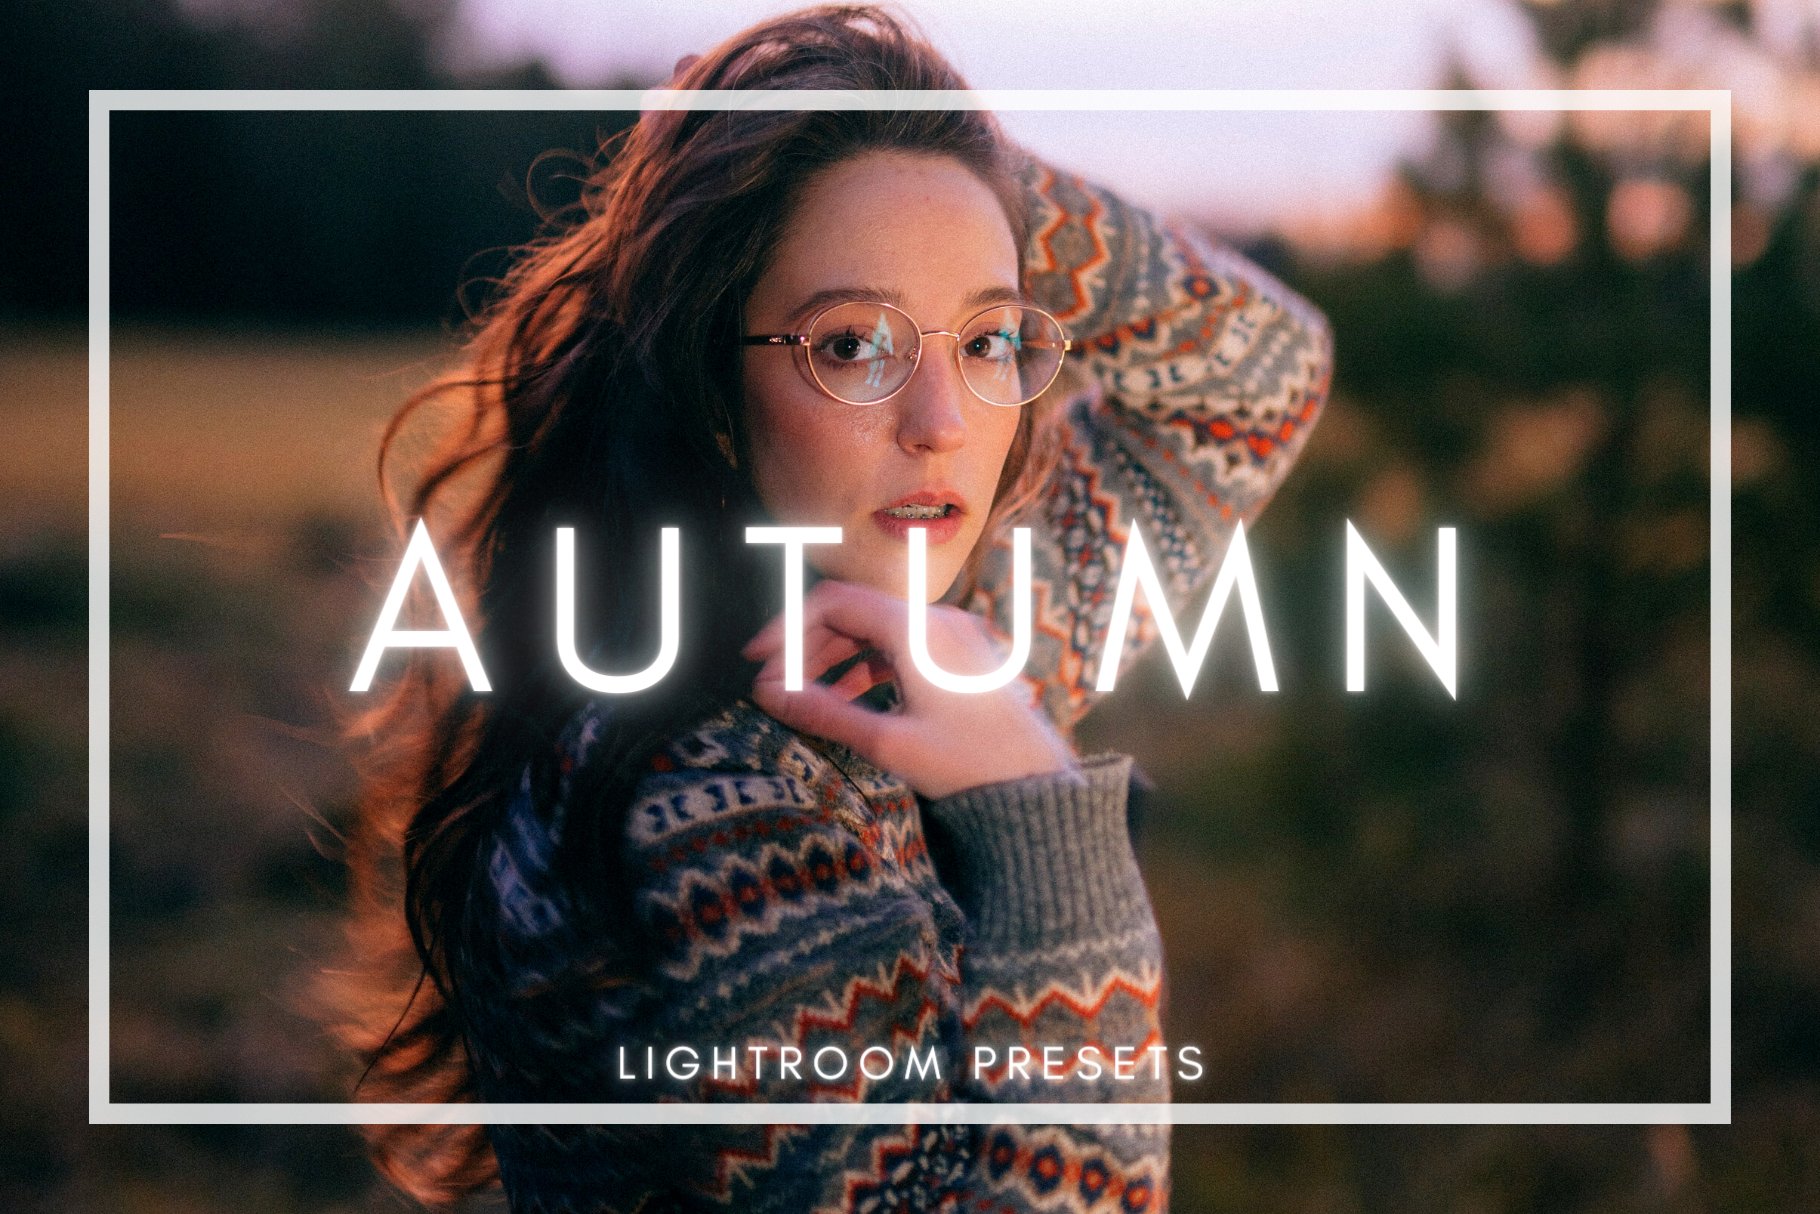 Autumn Lightroom Presets 2022cover image.